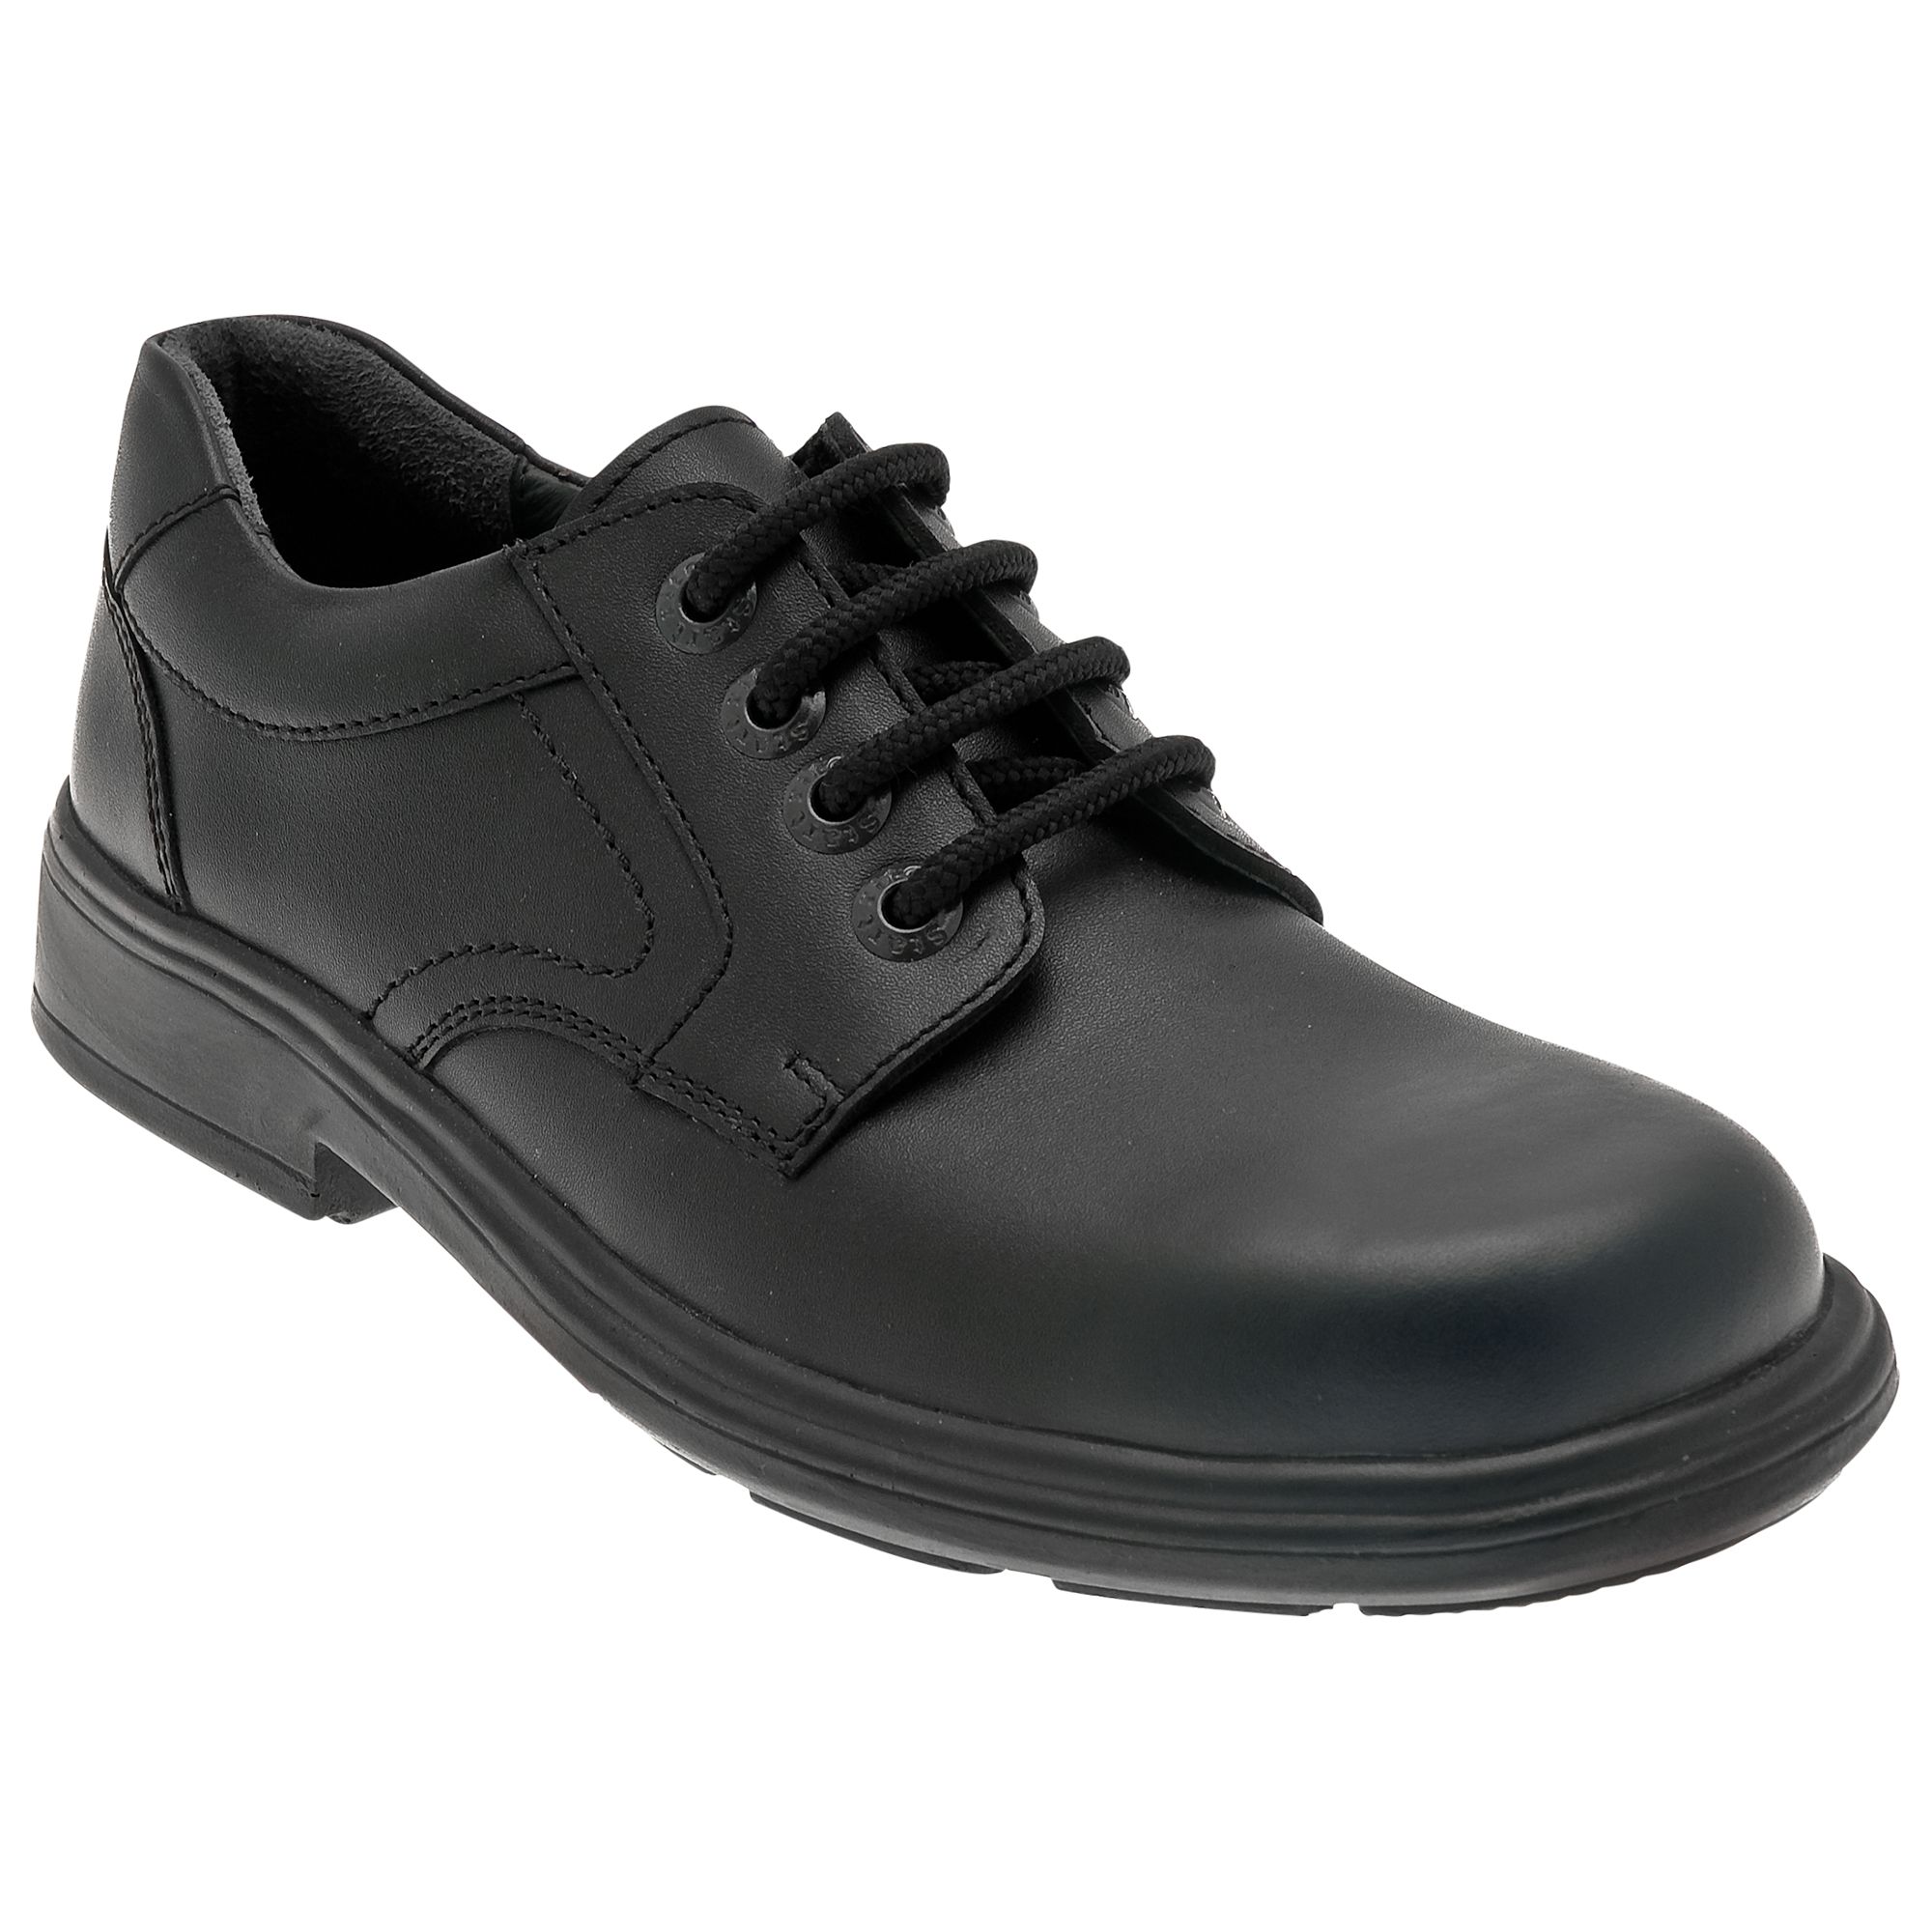 Start-rite Rhino Isaac Shoes, Black